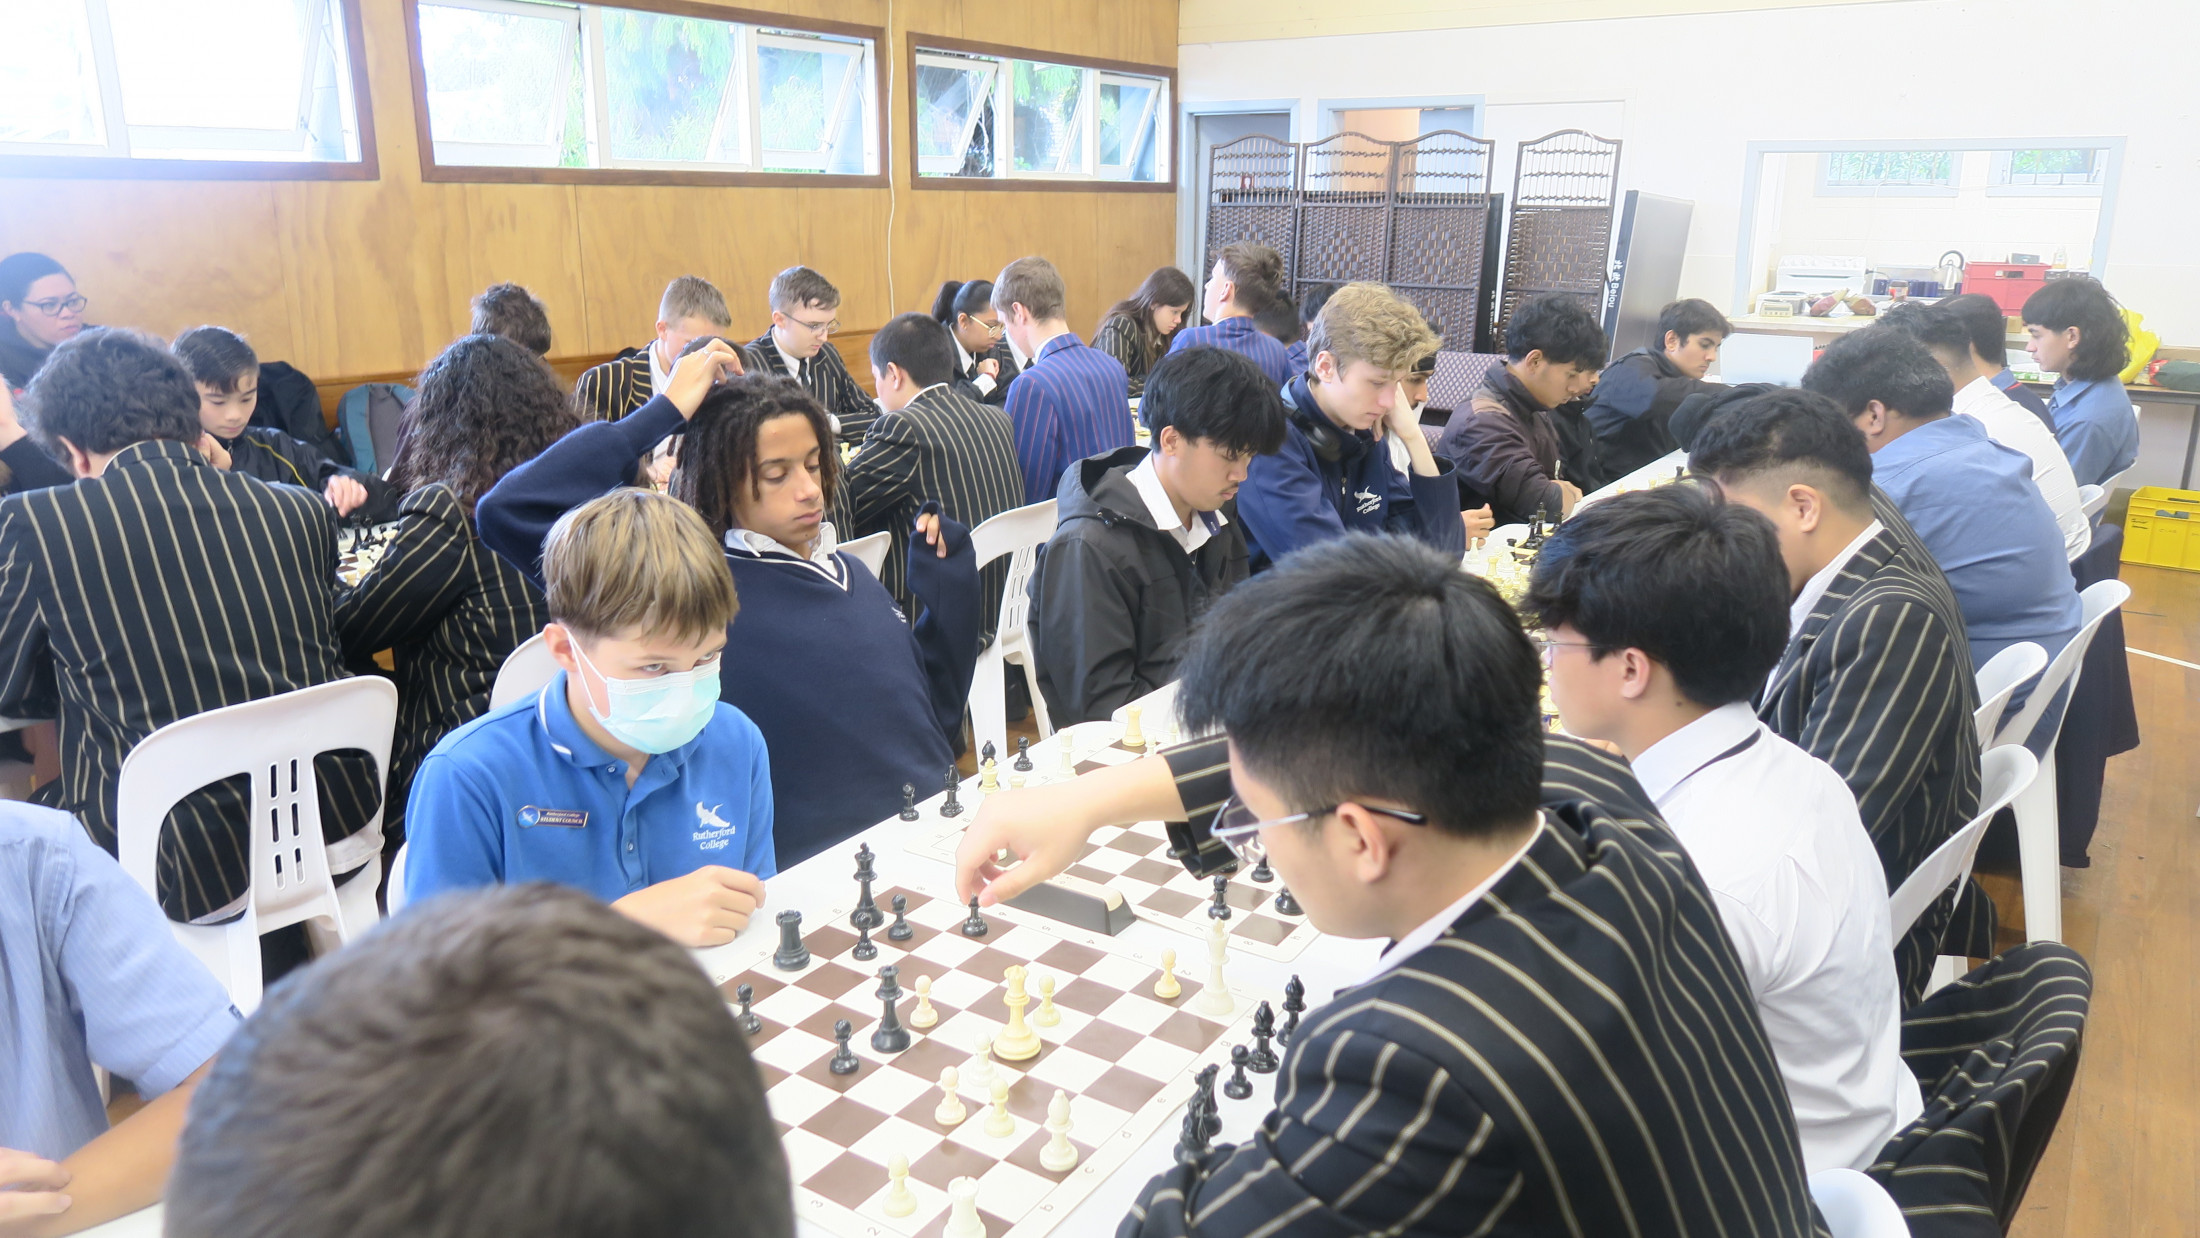 West Auckland Secondary Interschool Chess Championship